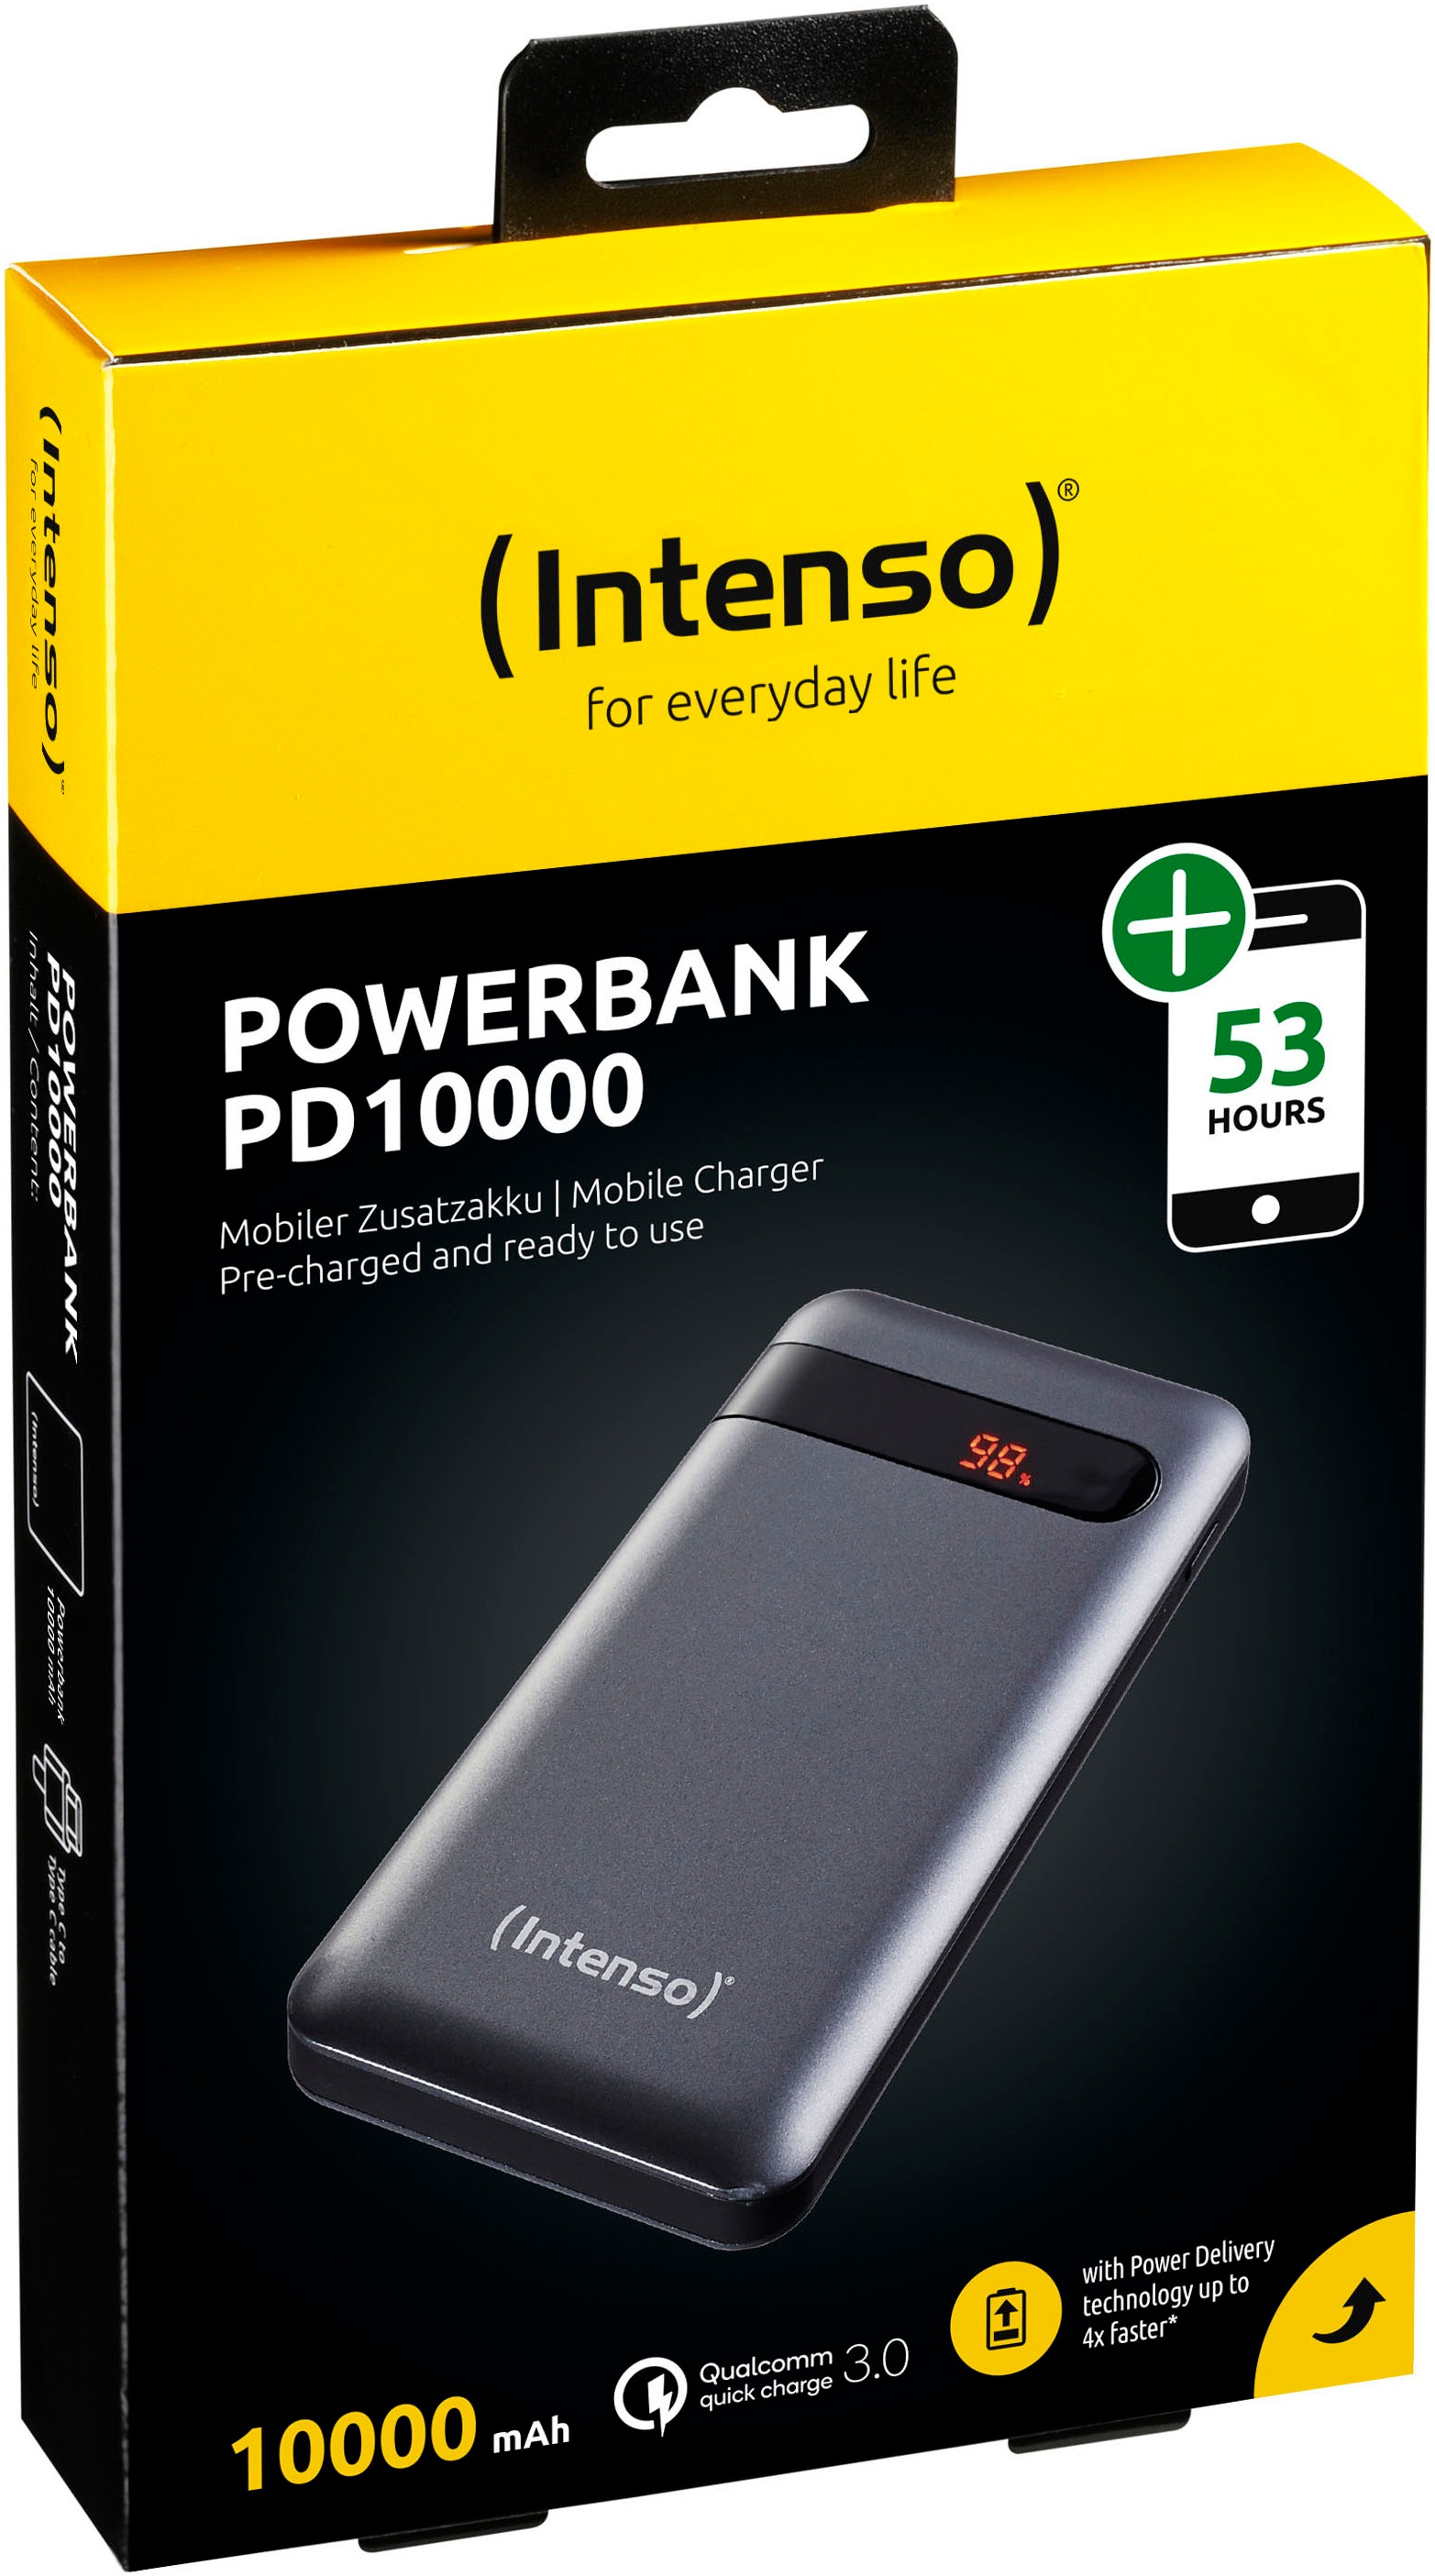 Intenso Powerbank »PD10000«, 10000 mAh